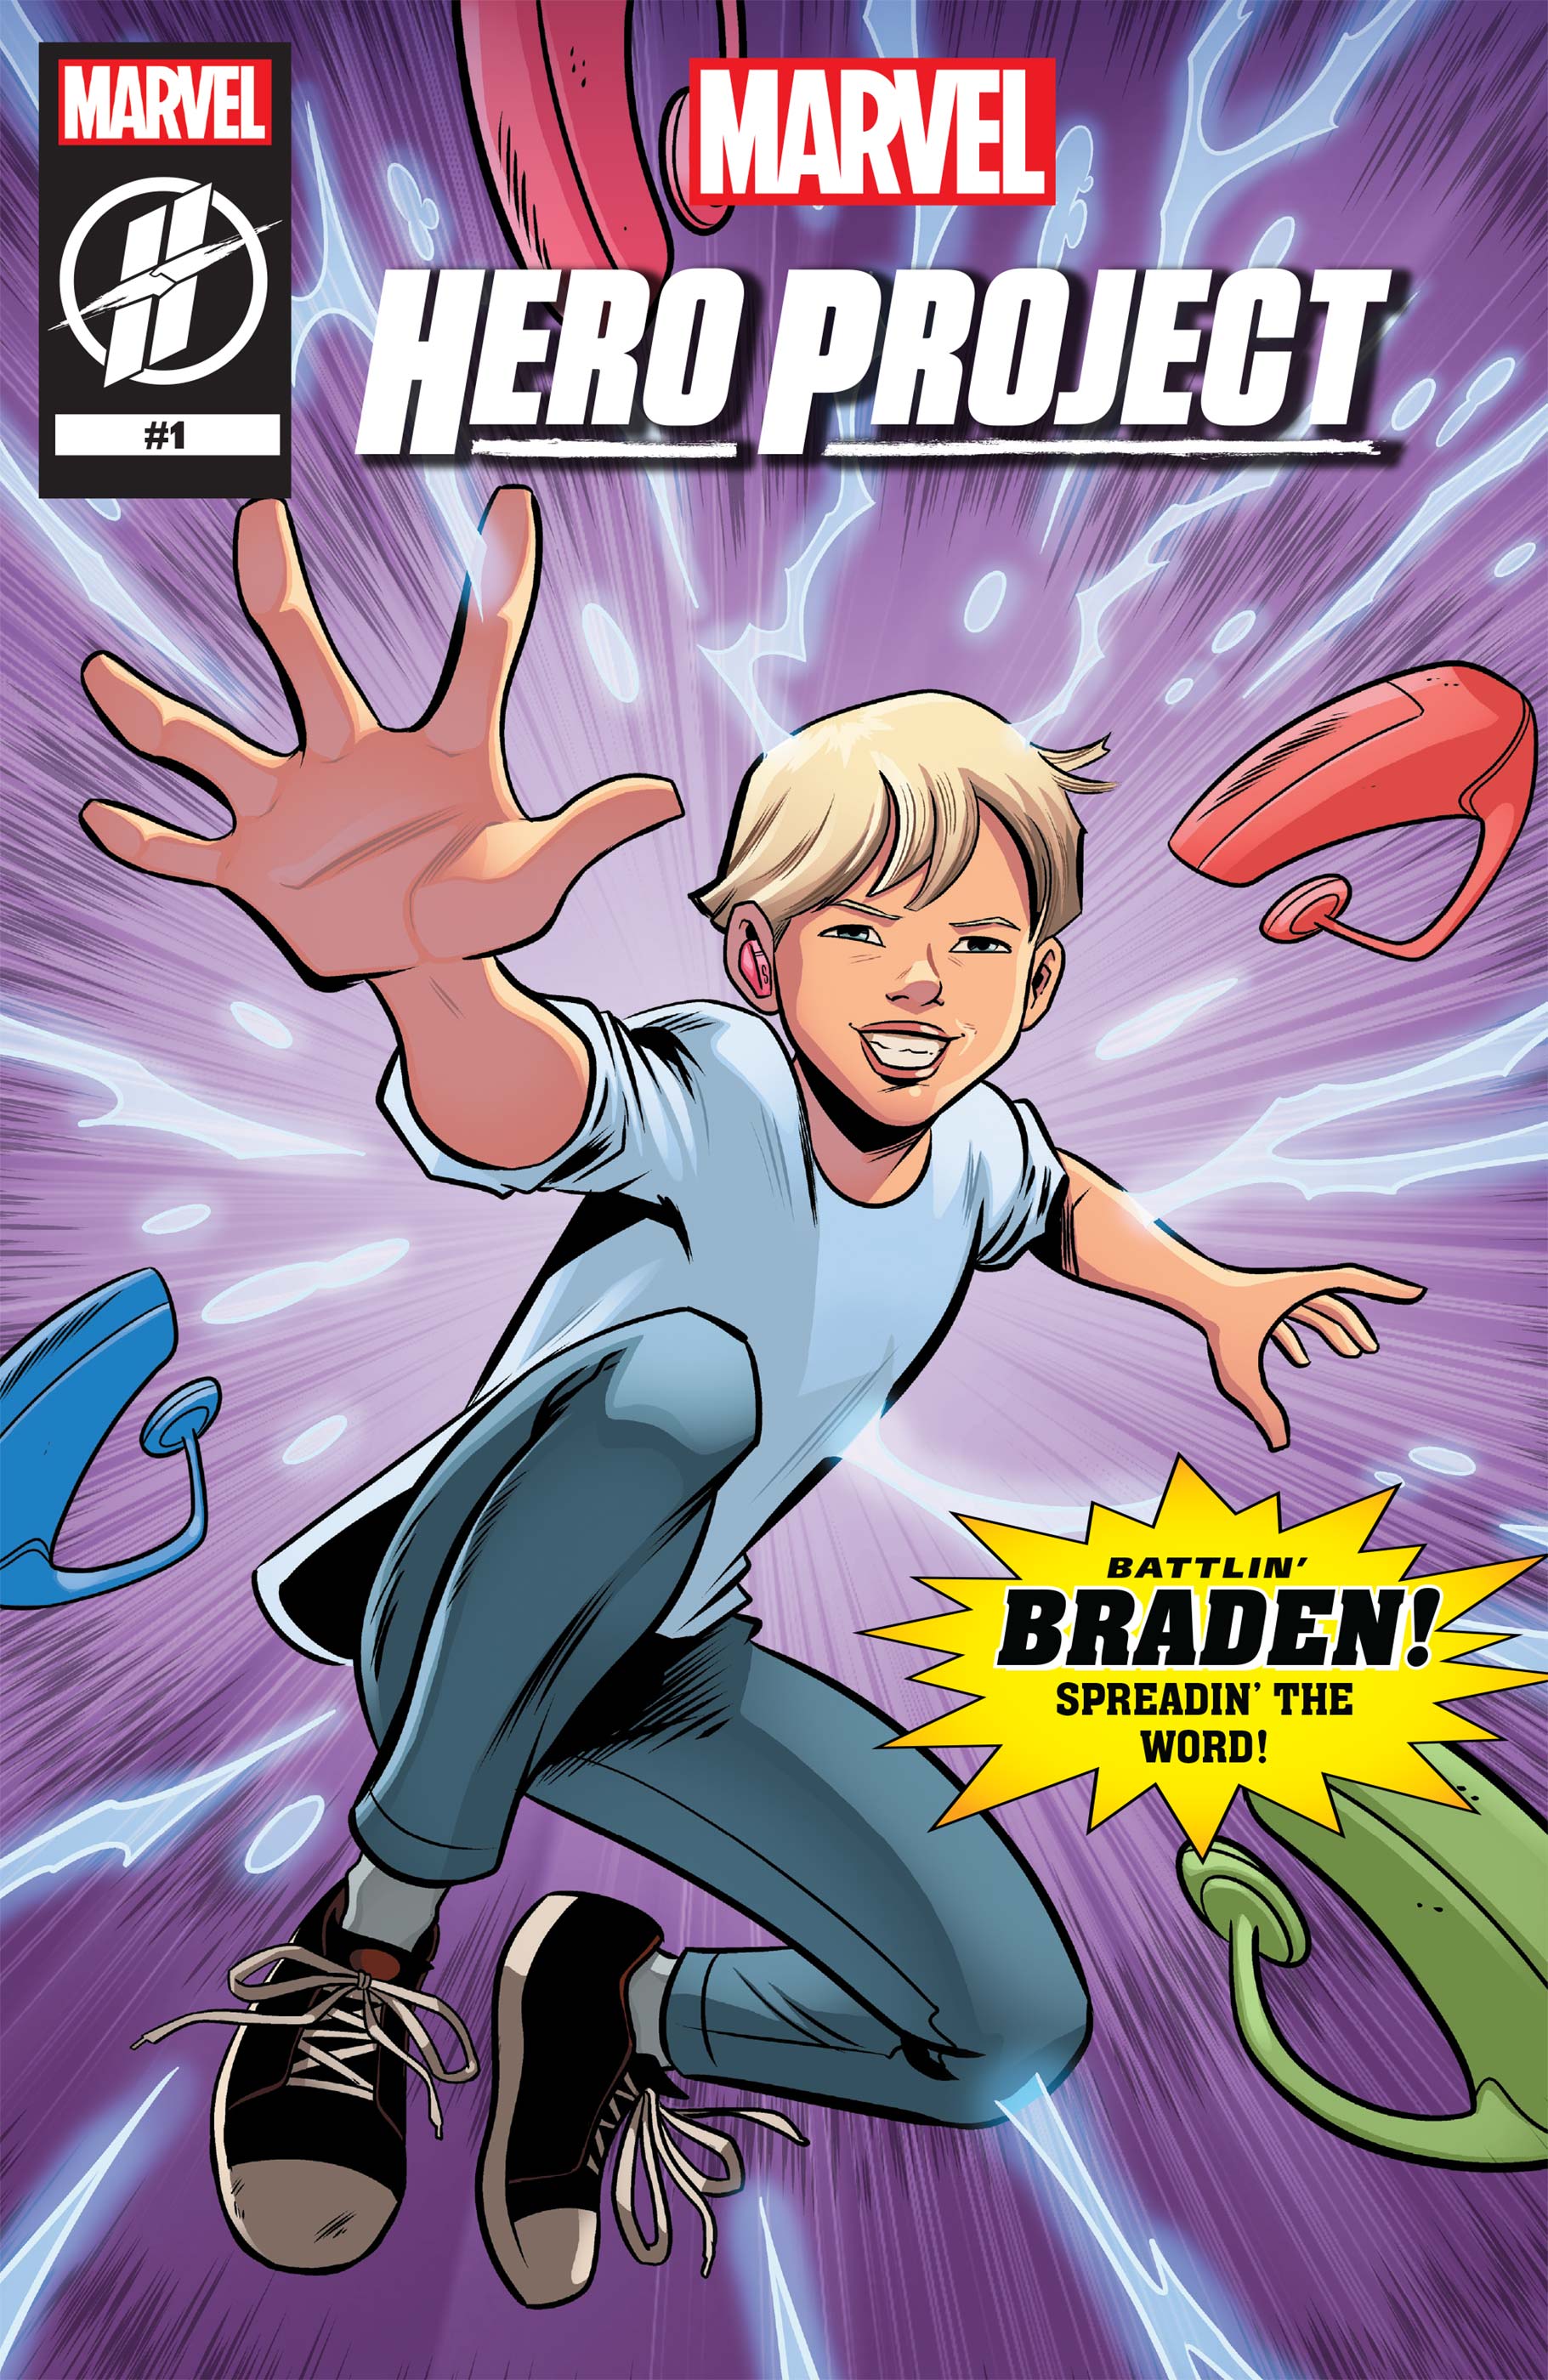 Read online Marvel Hero Project: Braden comic -  Issue # Full - 1